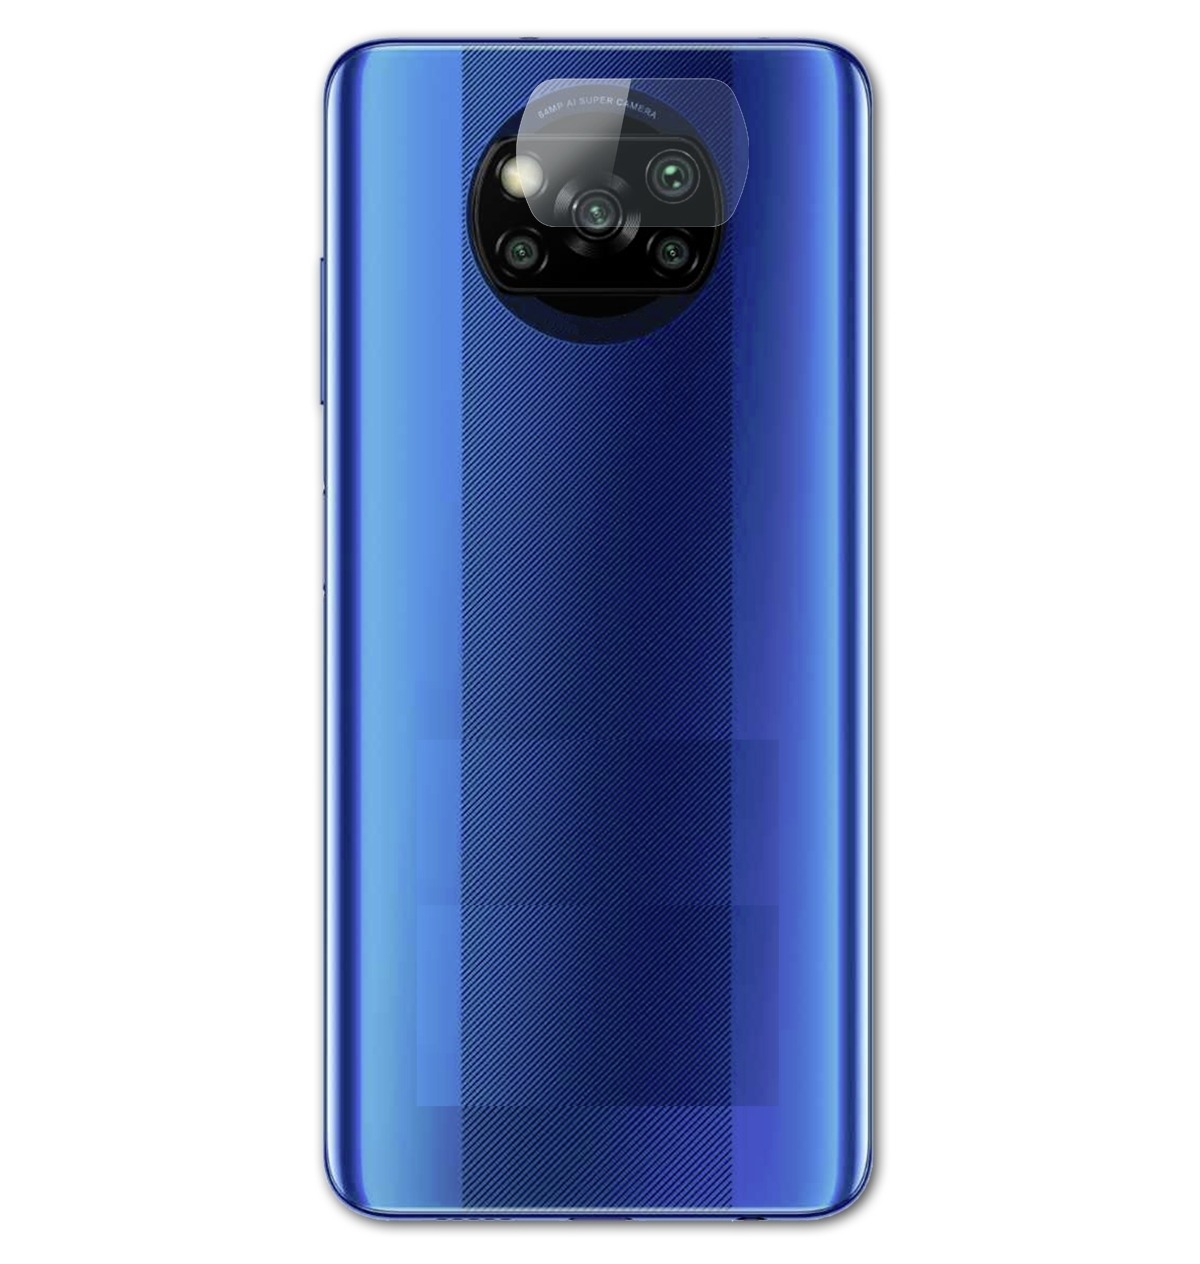 Pro X3 Xiaomi Poco Schutzglas(für FX-Hybrid-Glass (Lens)) ATFOLIX